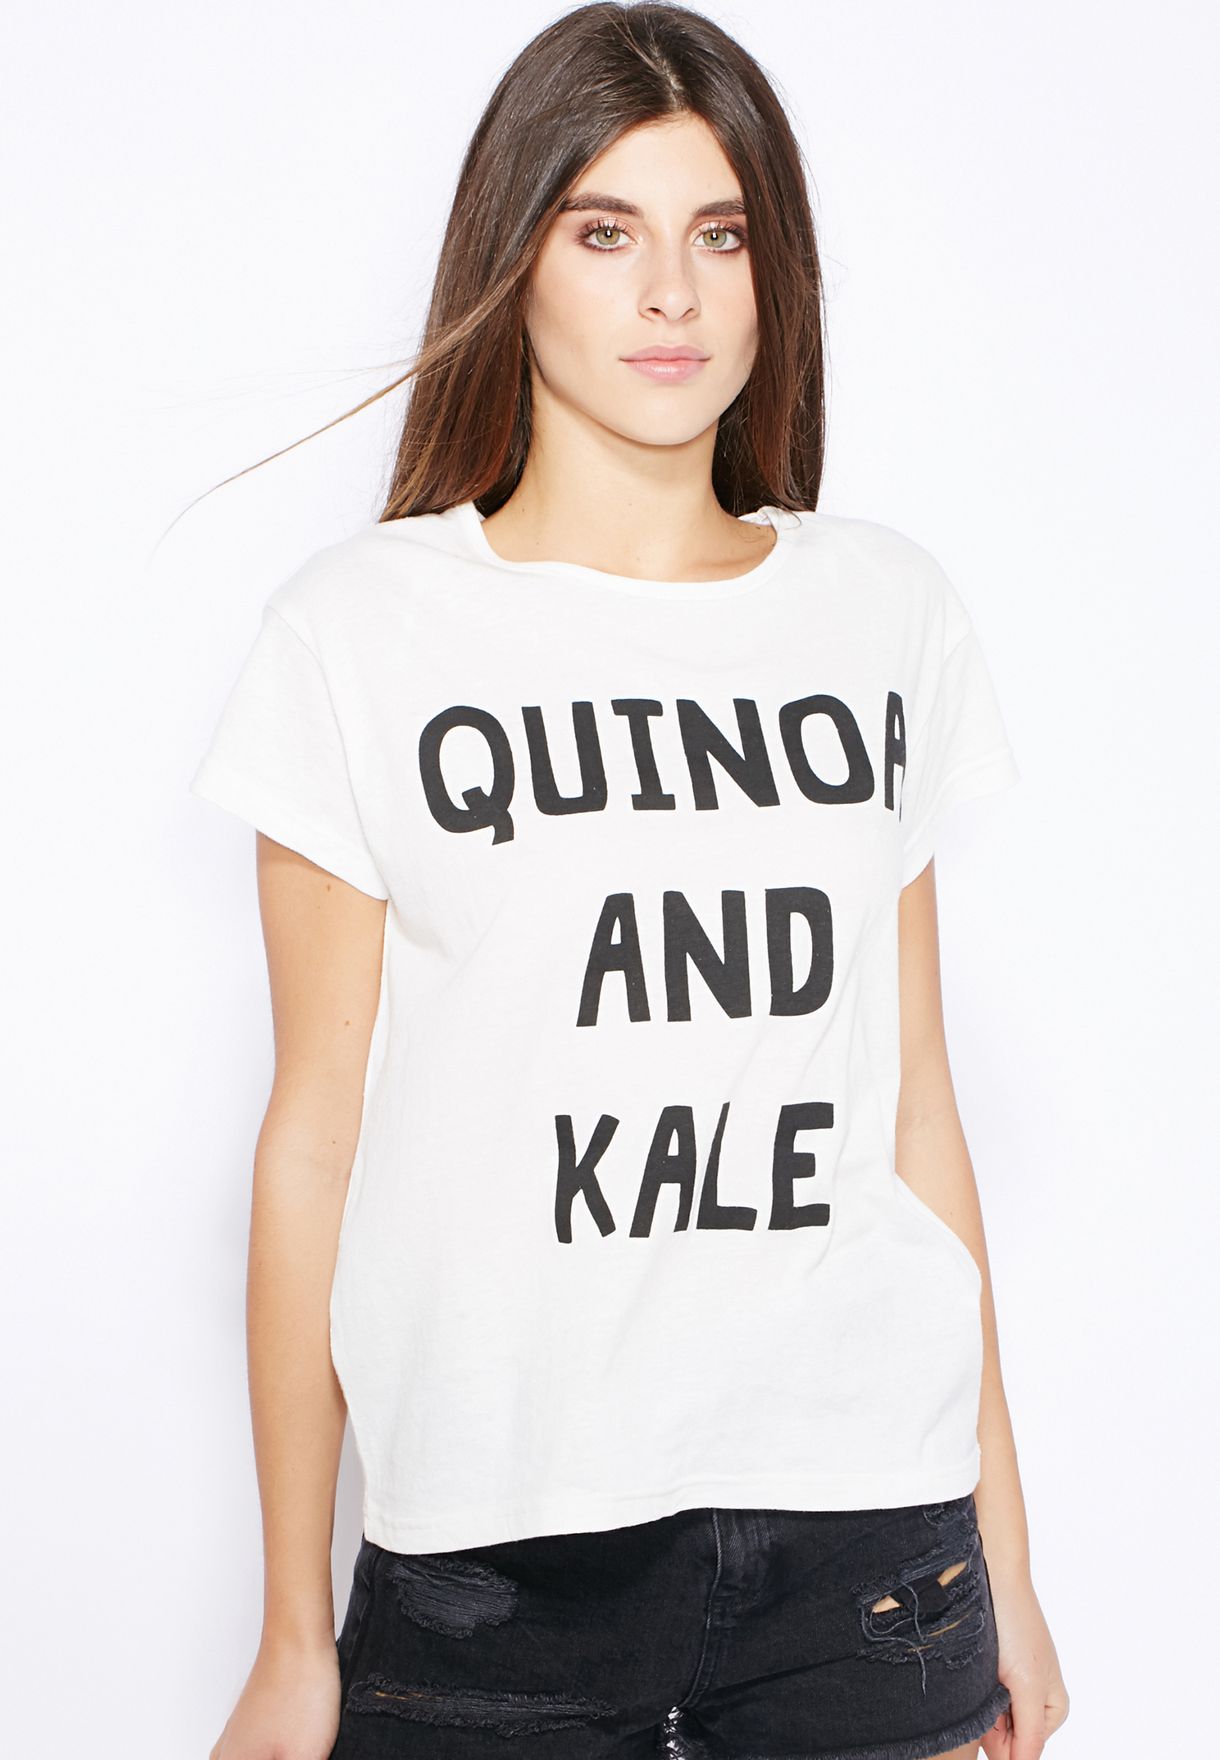 Quinoa And Kale T-shirt